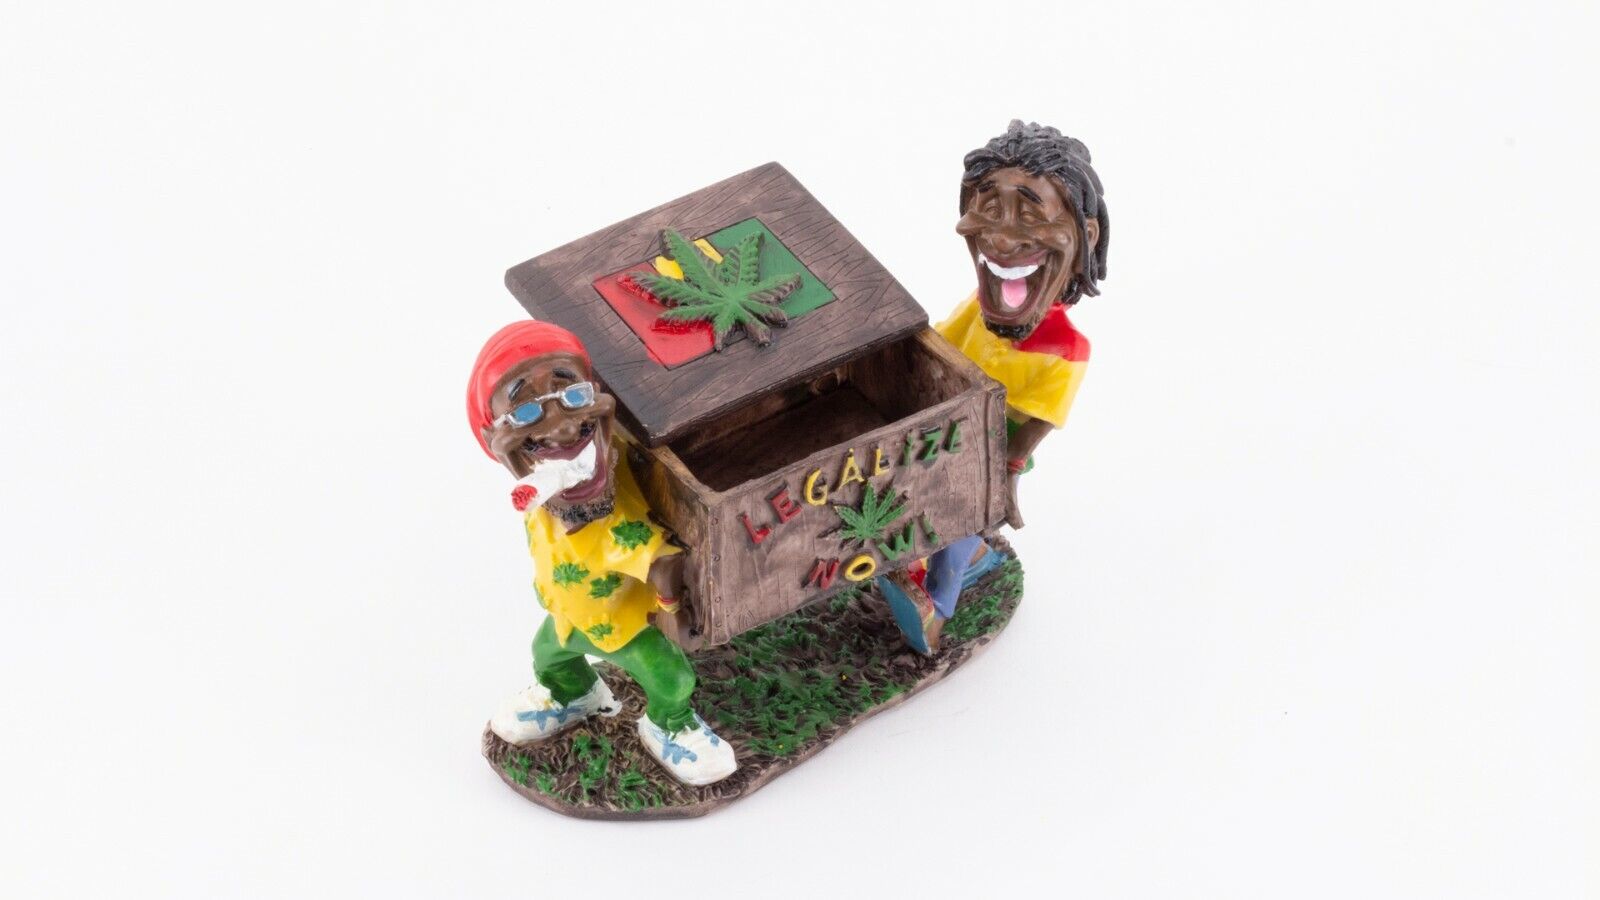 Two Rasta Jamaican Men Legalize Now Treasure Box with Cover Cigarette Ashtray